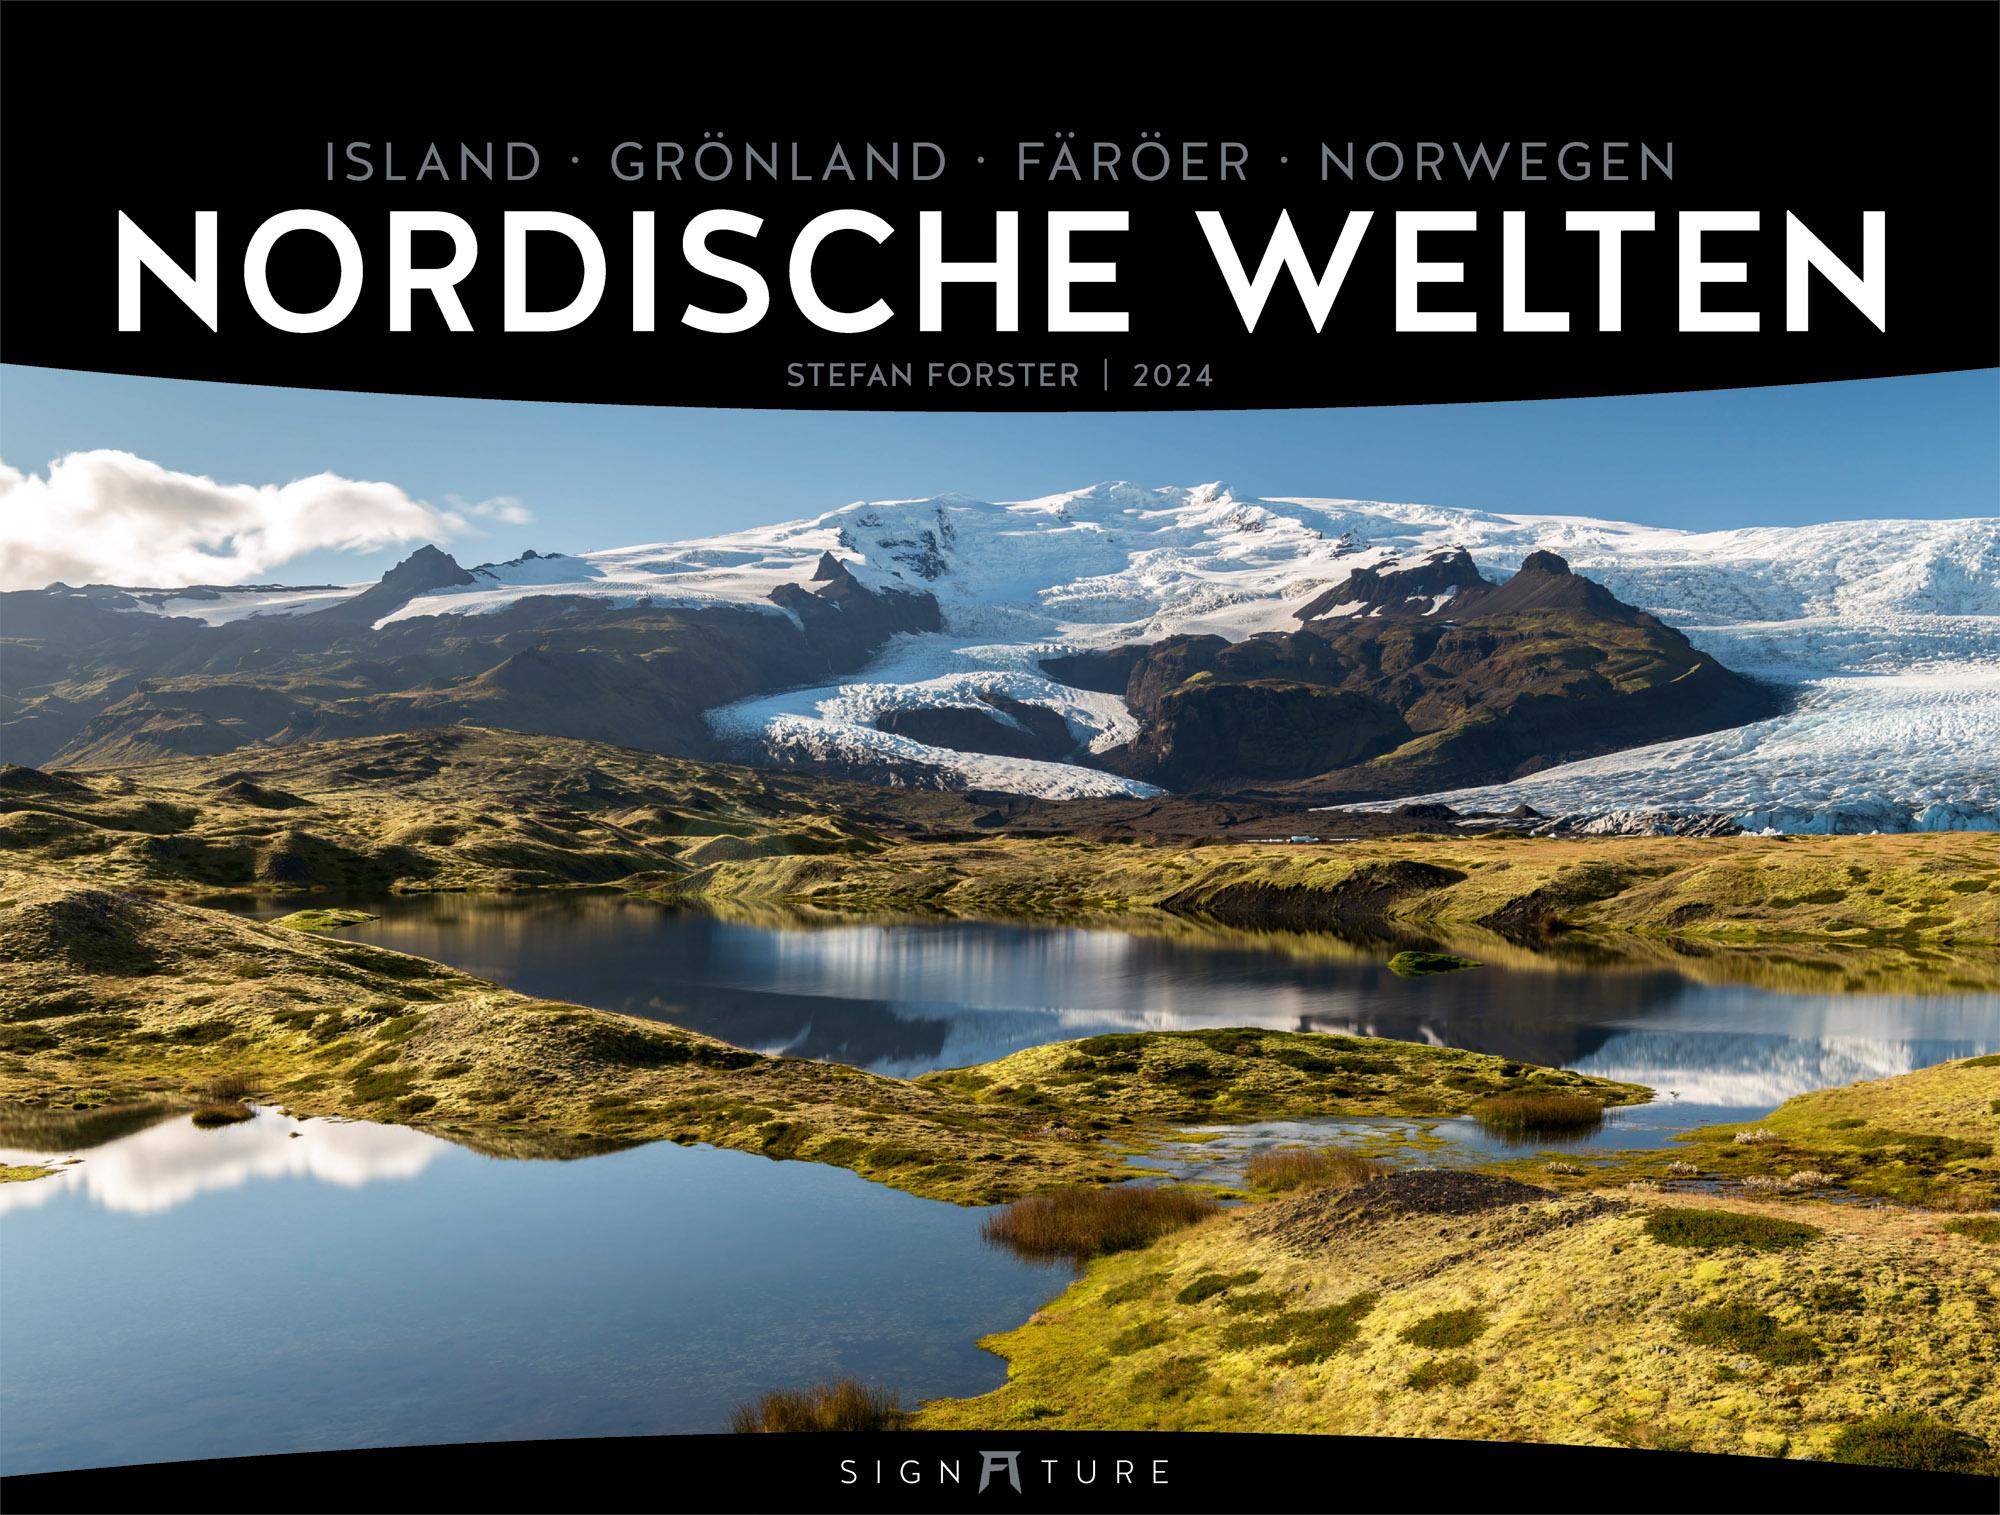 Nordische Welten - Stefan Forster - Signature Kalender 2024 Maße (B/H): 66 x 50 cm, Fotokalender